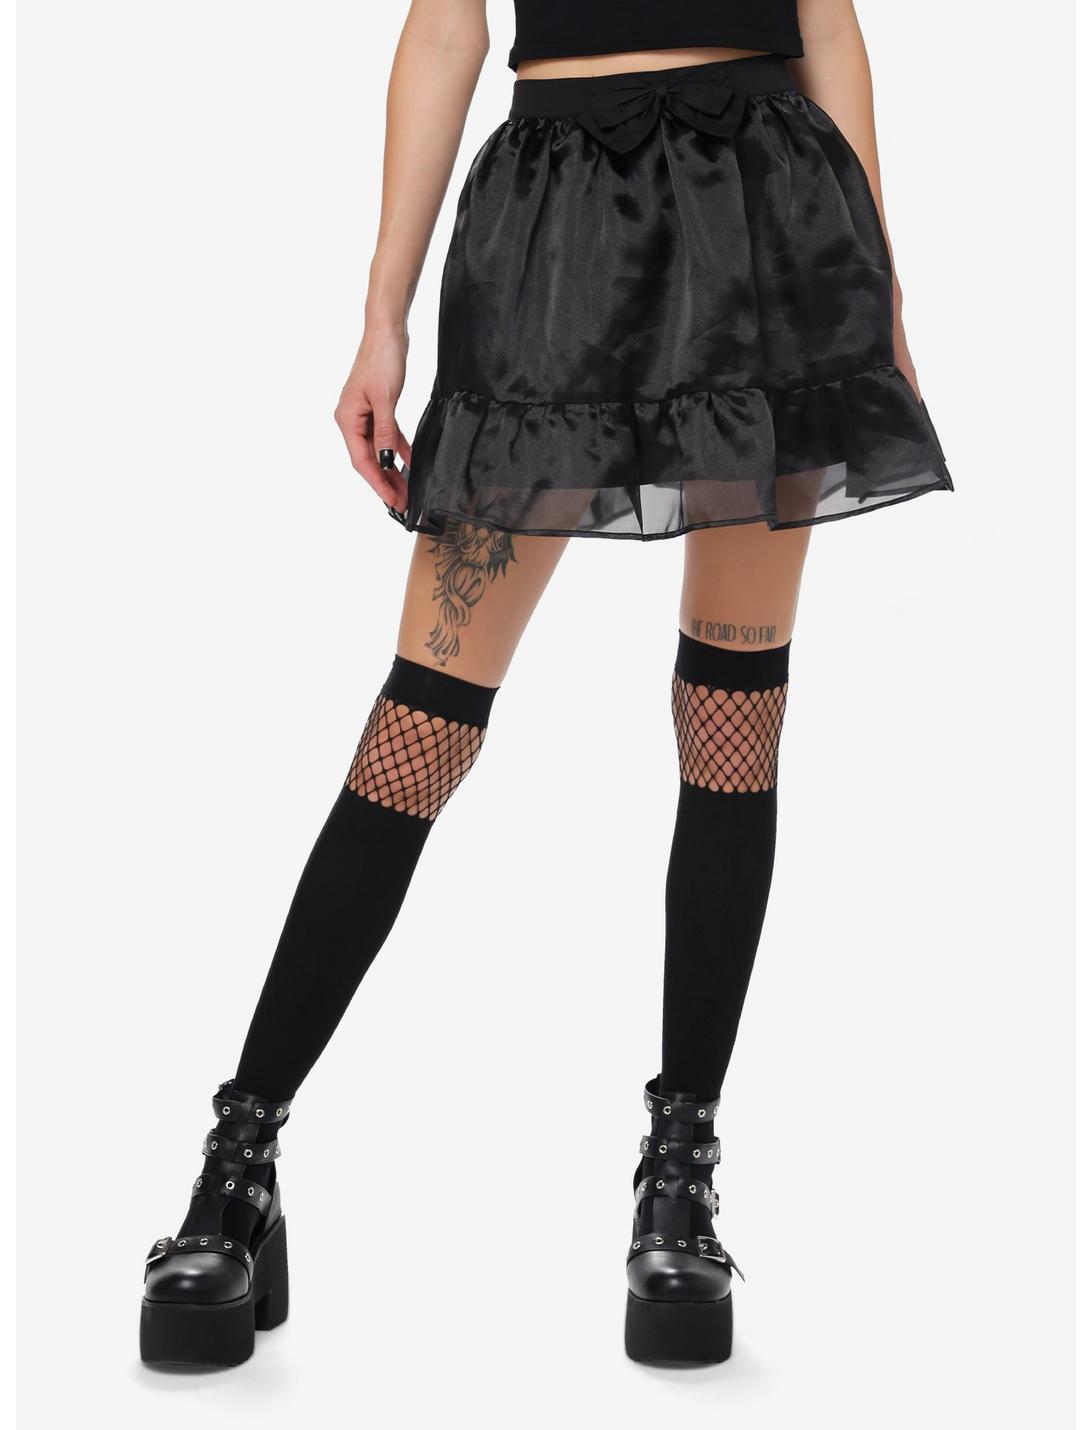 Cosmic Aura Black Organza Bow Mini Skirt, BLACK, hi-res